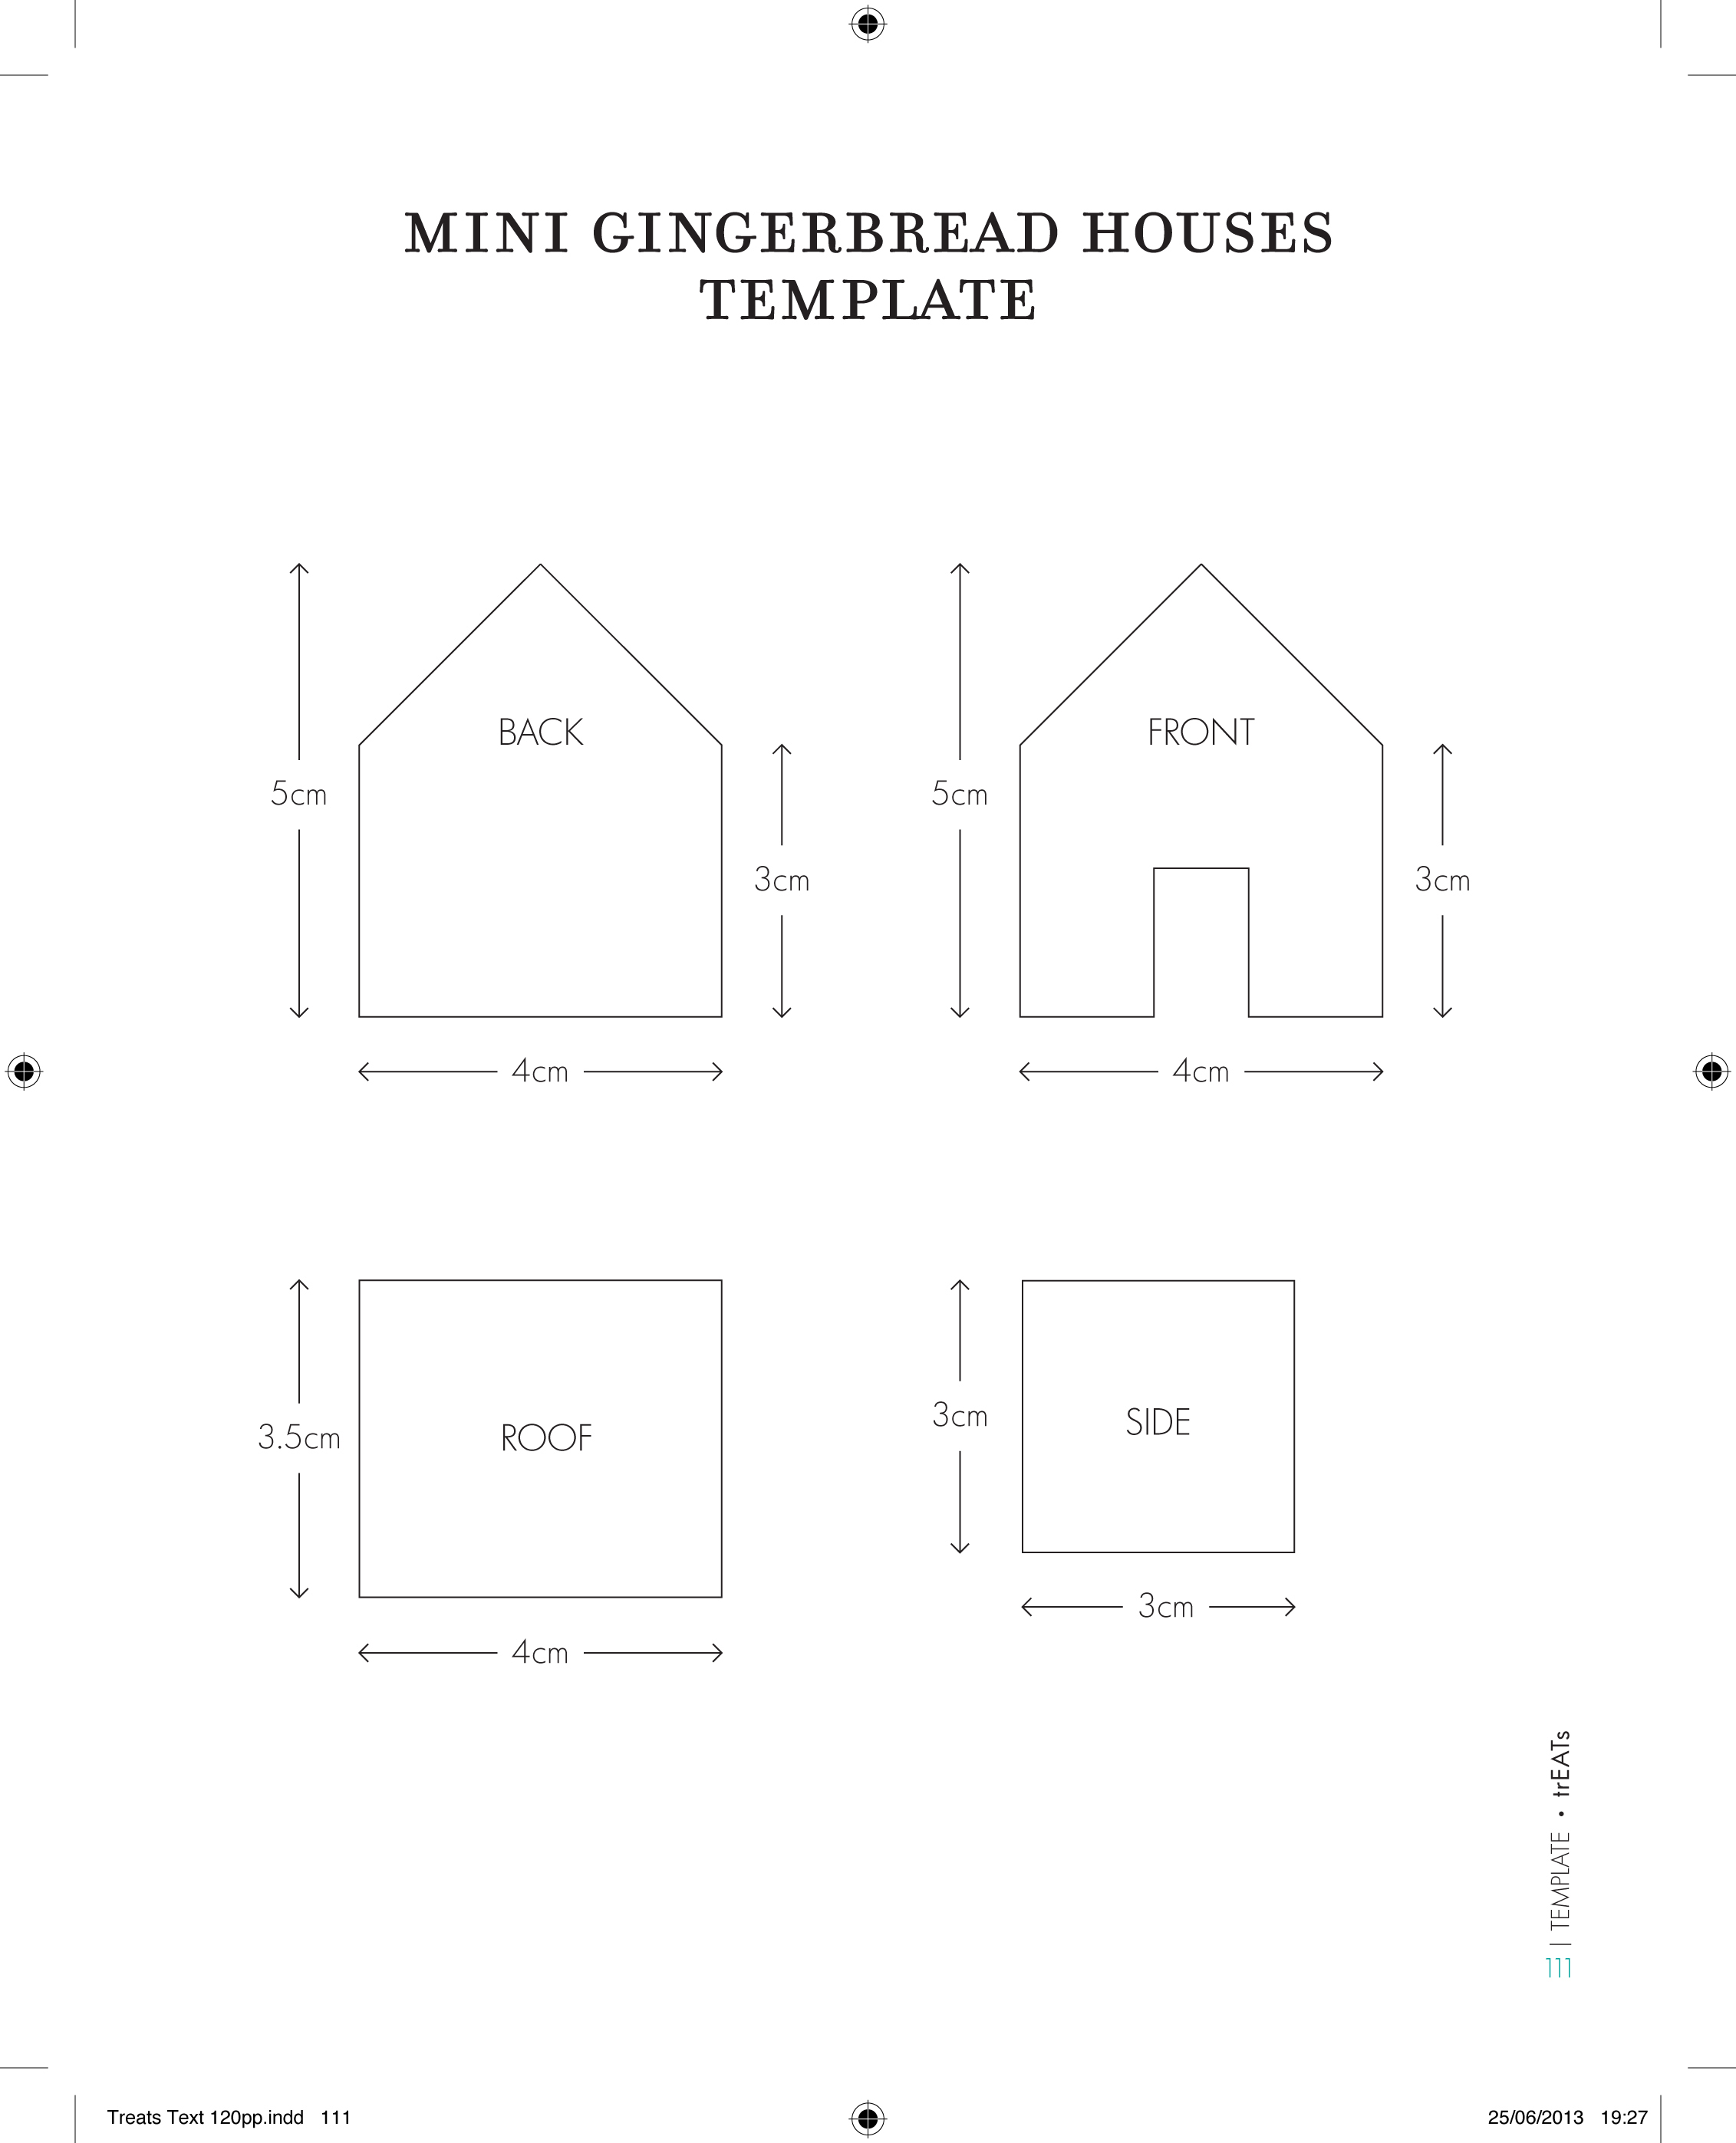 Mini Gingerbread House Template Printable - Printable Templates